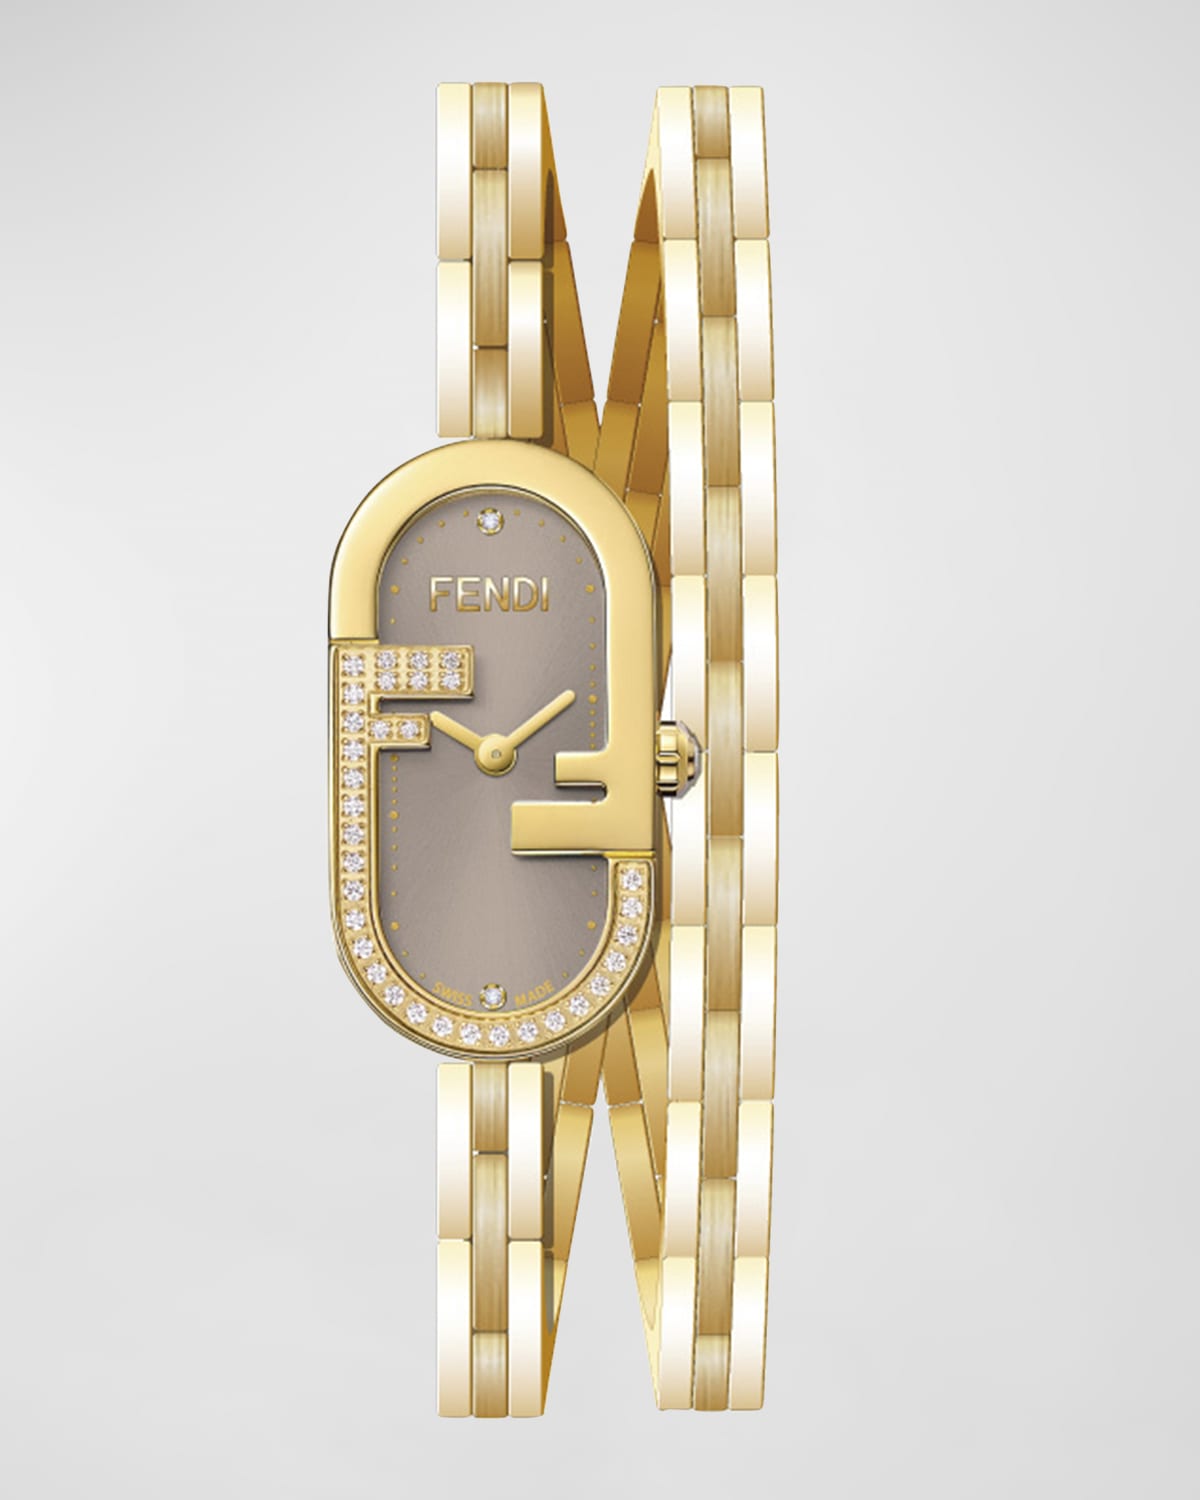 O'Lock Diamond Vertical Oval Bracelet Watch